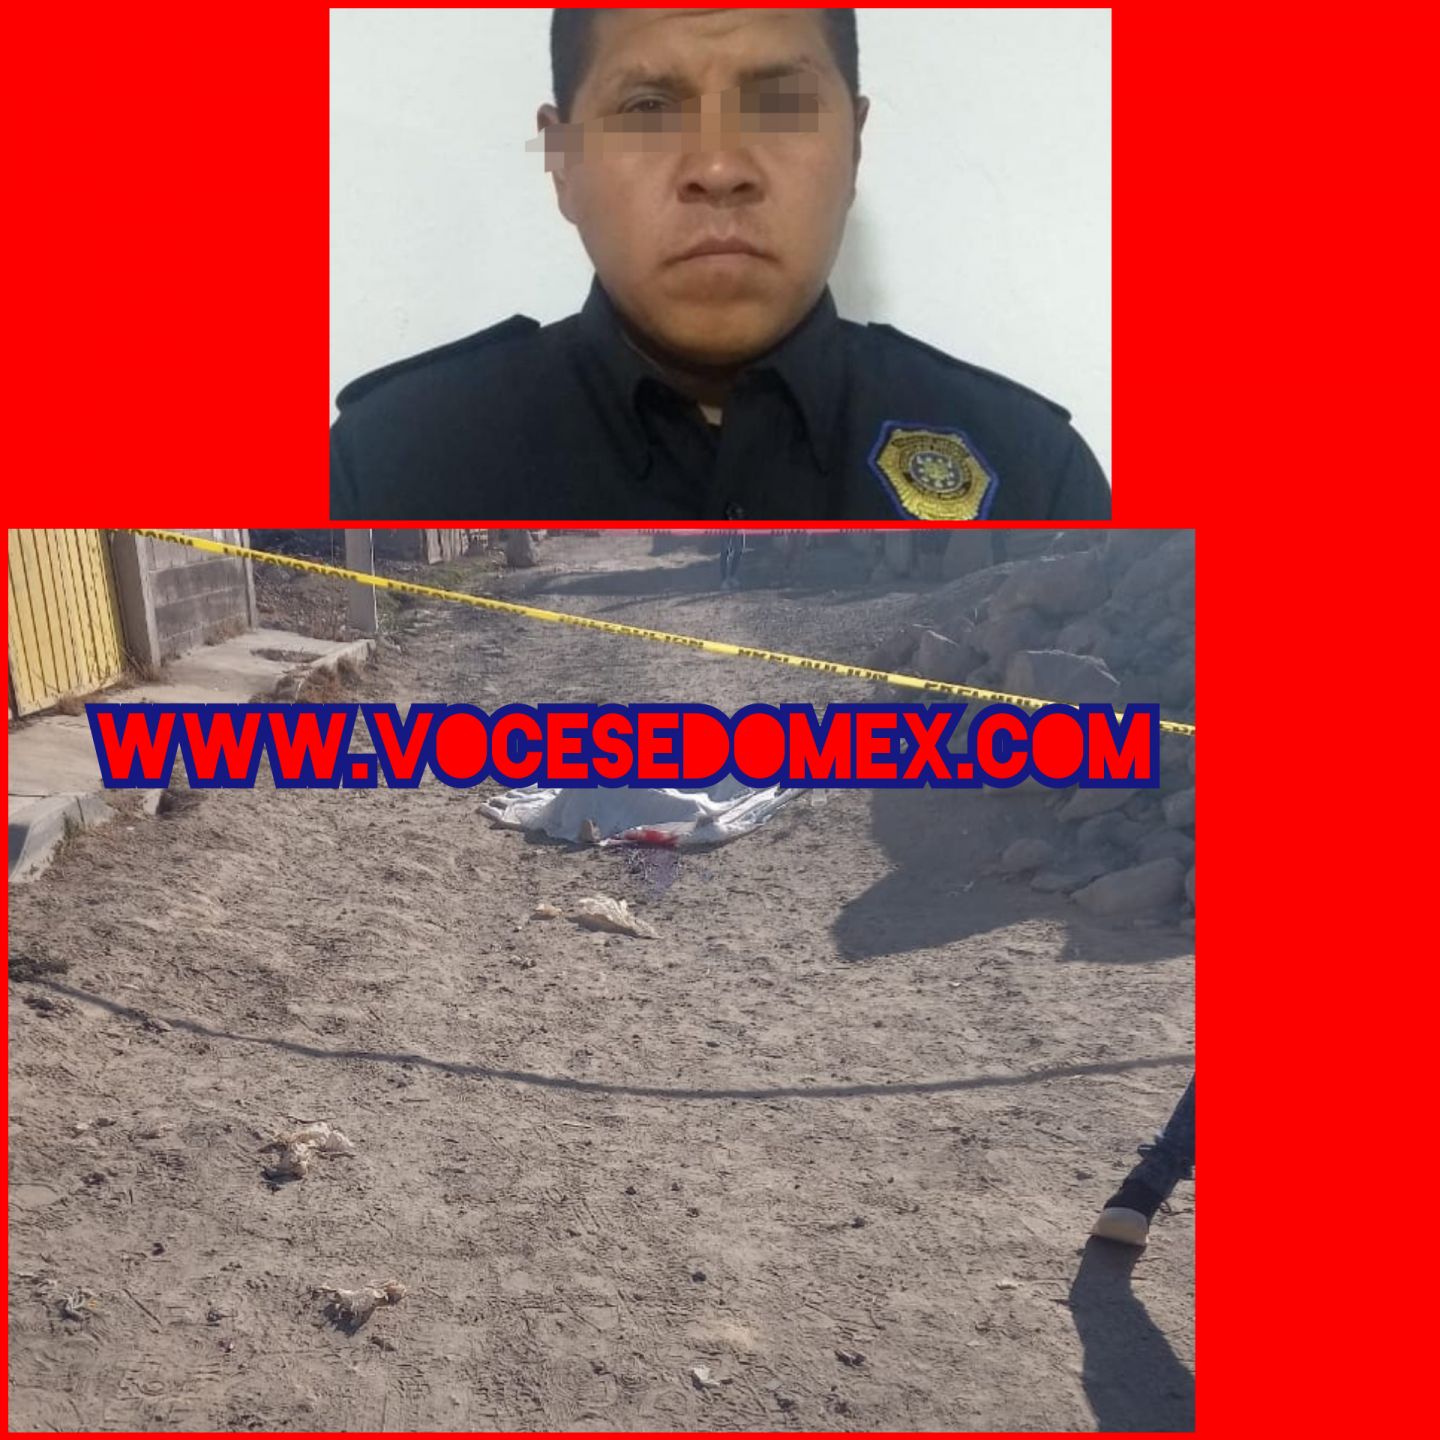 Matan a policía auxiliar en Chimalhuacán para rabarle sus pertenencias 